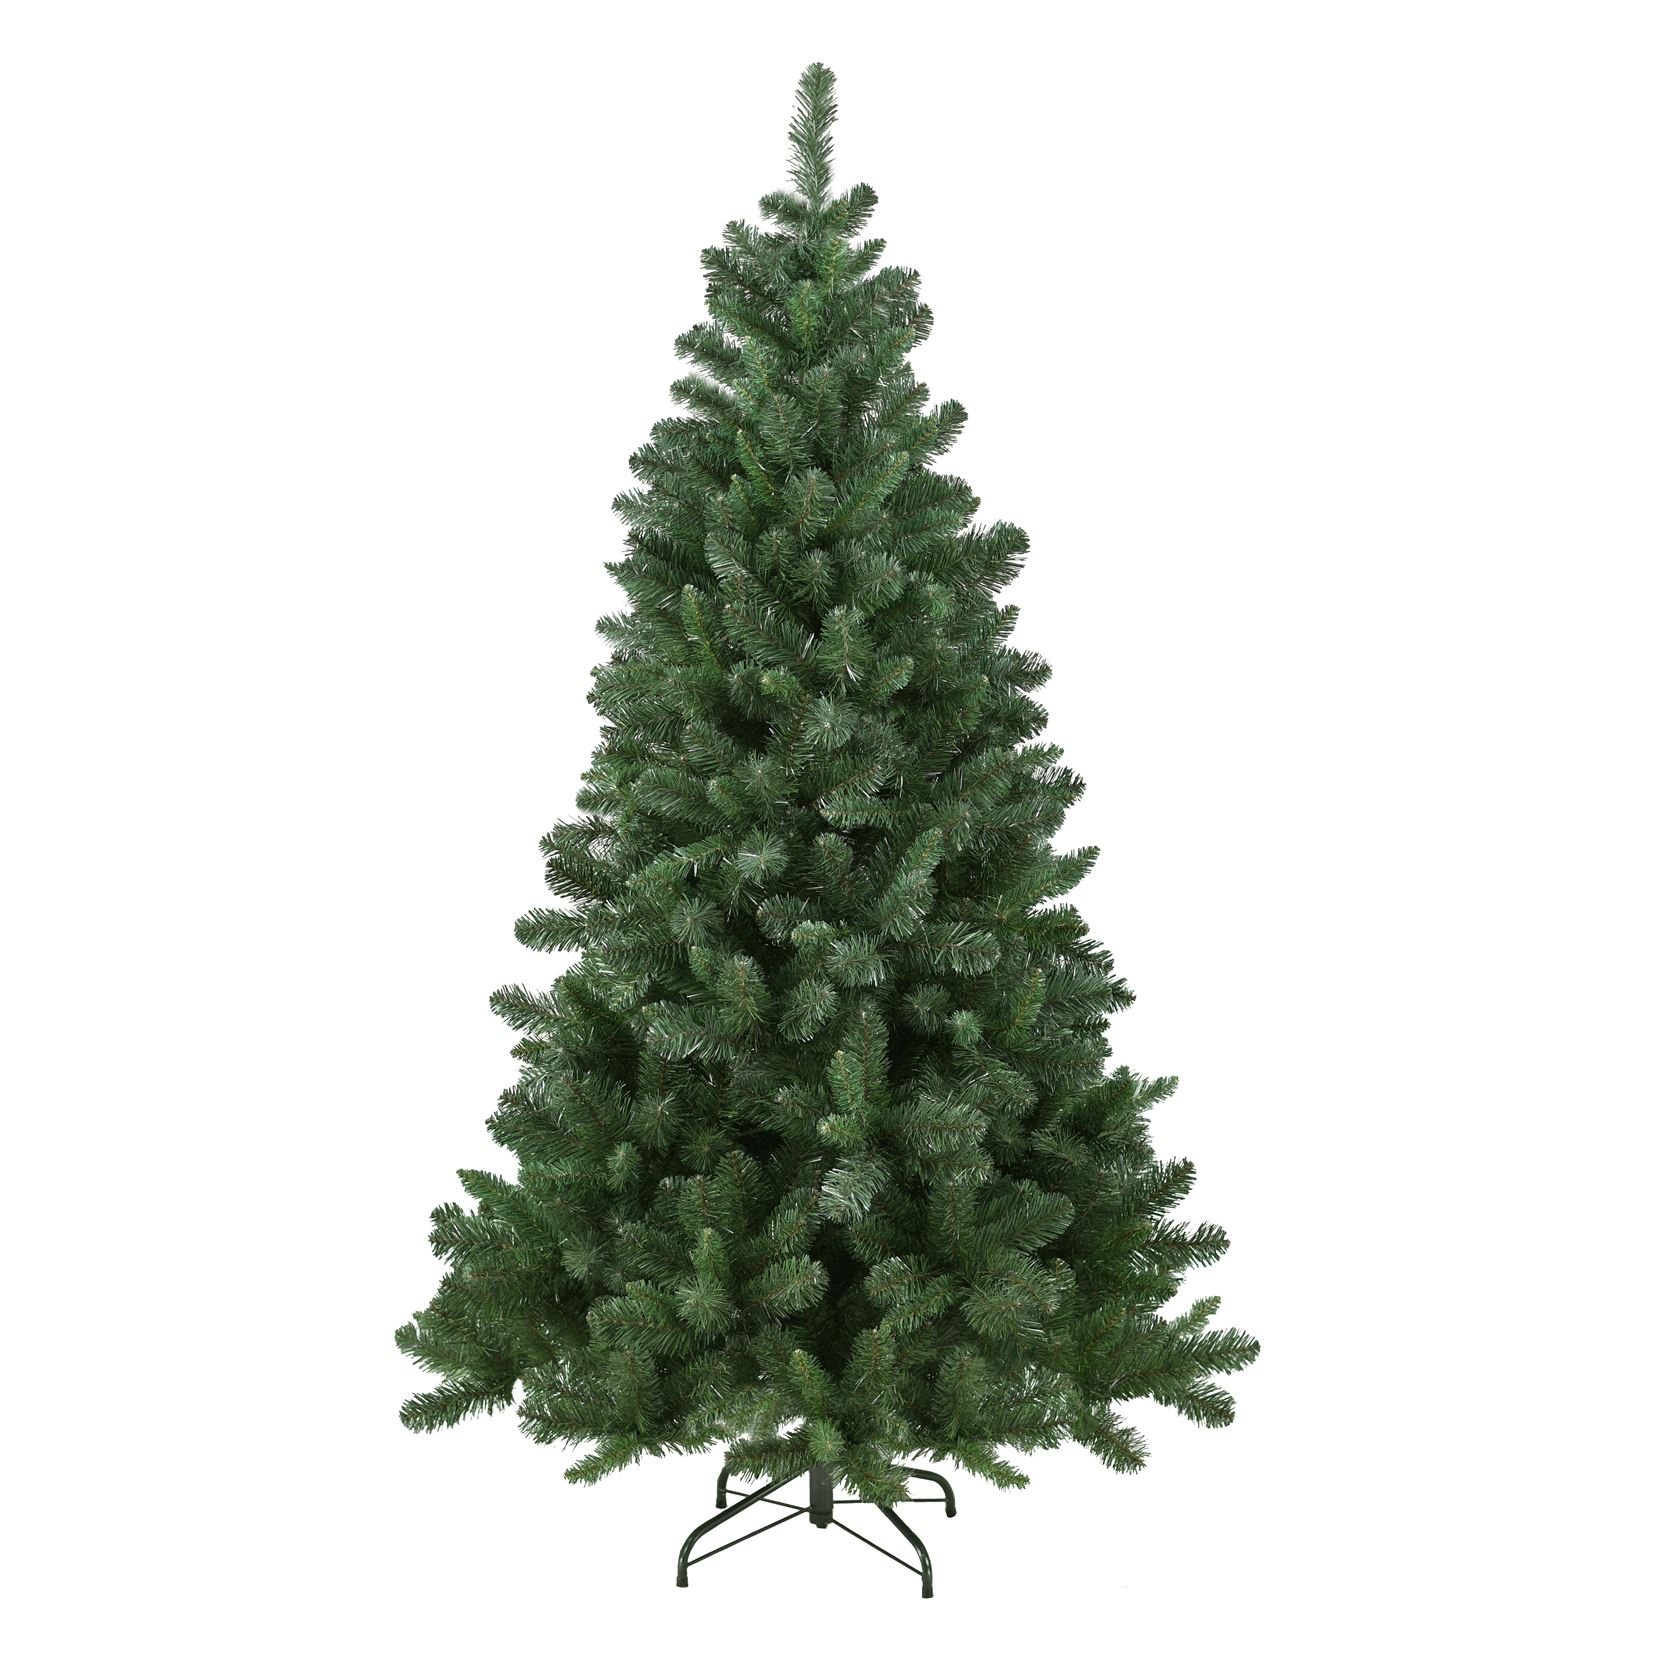 Blackhill kunstkerstboom - 150 cm - donkergroen - Ø 83 cm - 412 tips - metalen voet